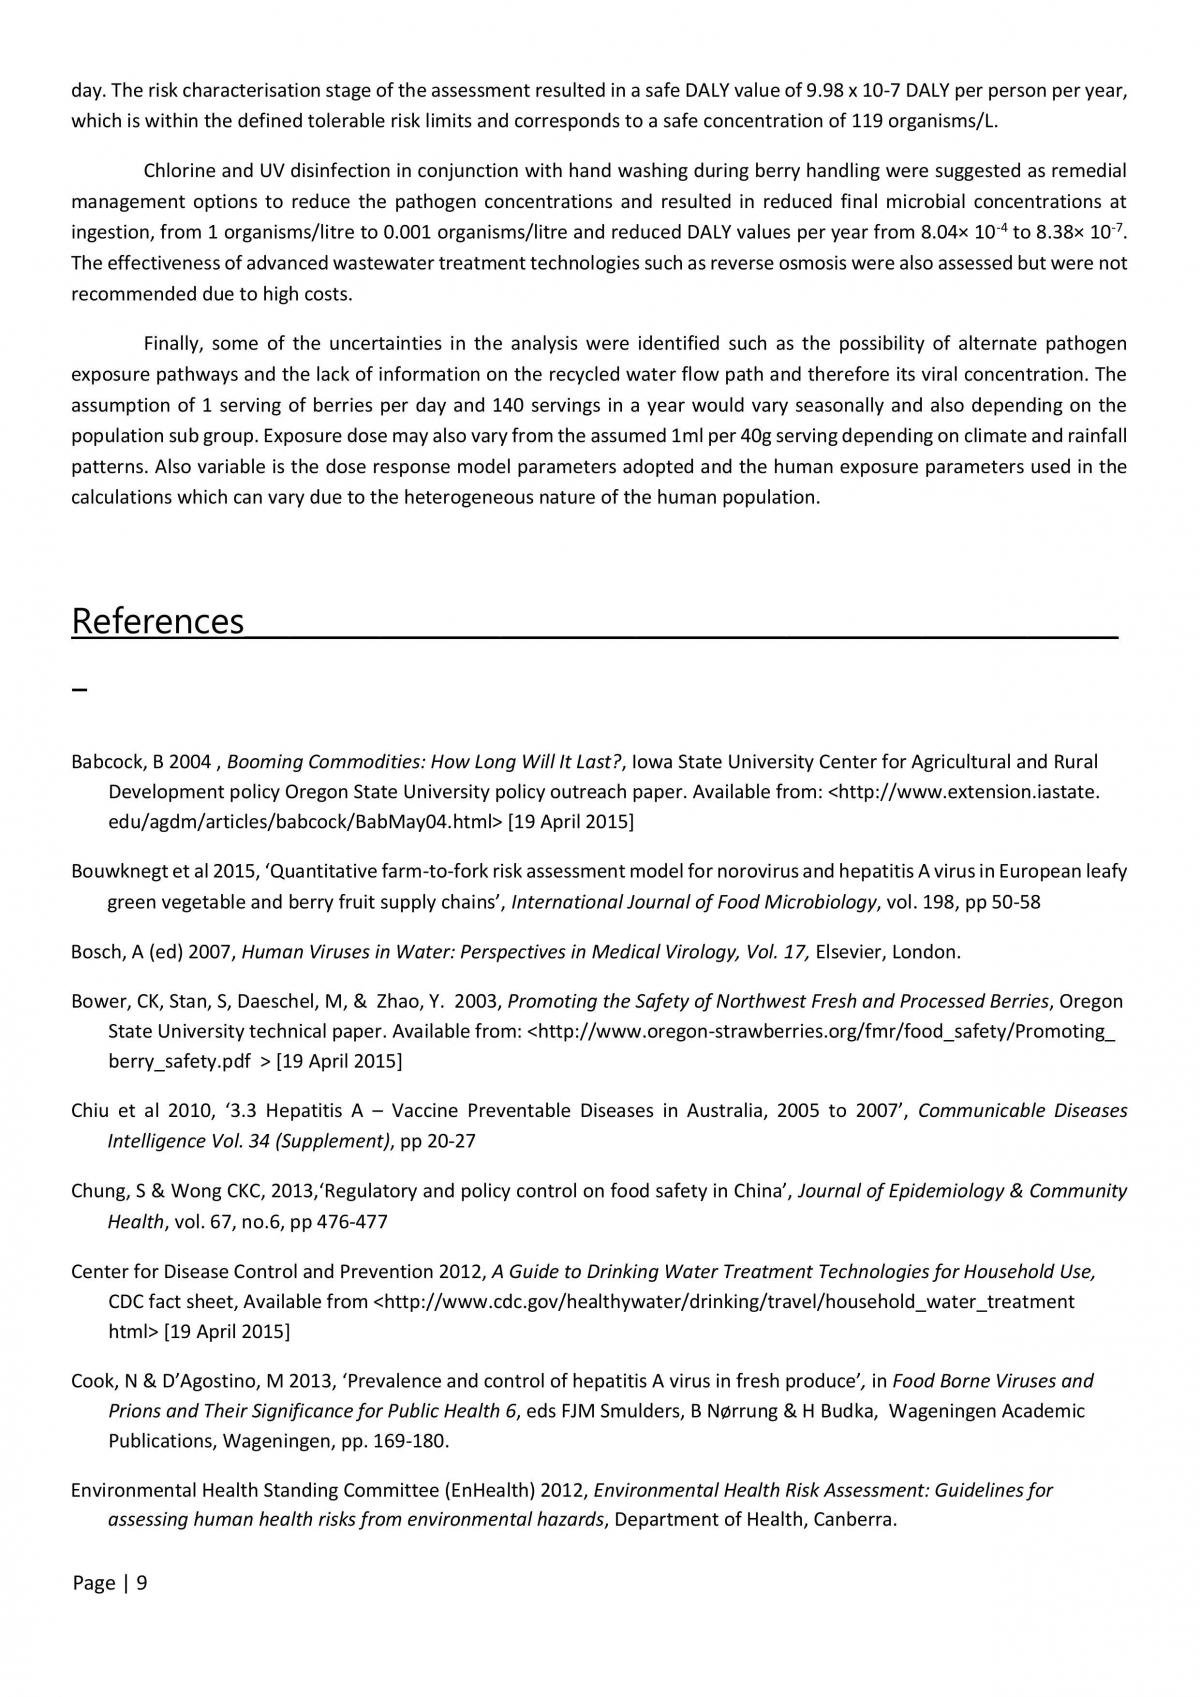 Assignment 1 - Risk Assessment (Grade: D) - Page 12